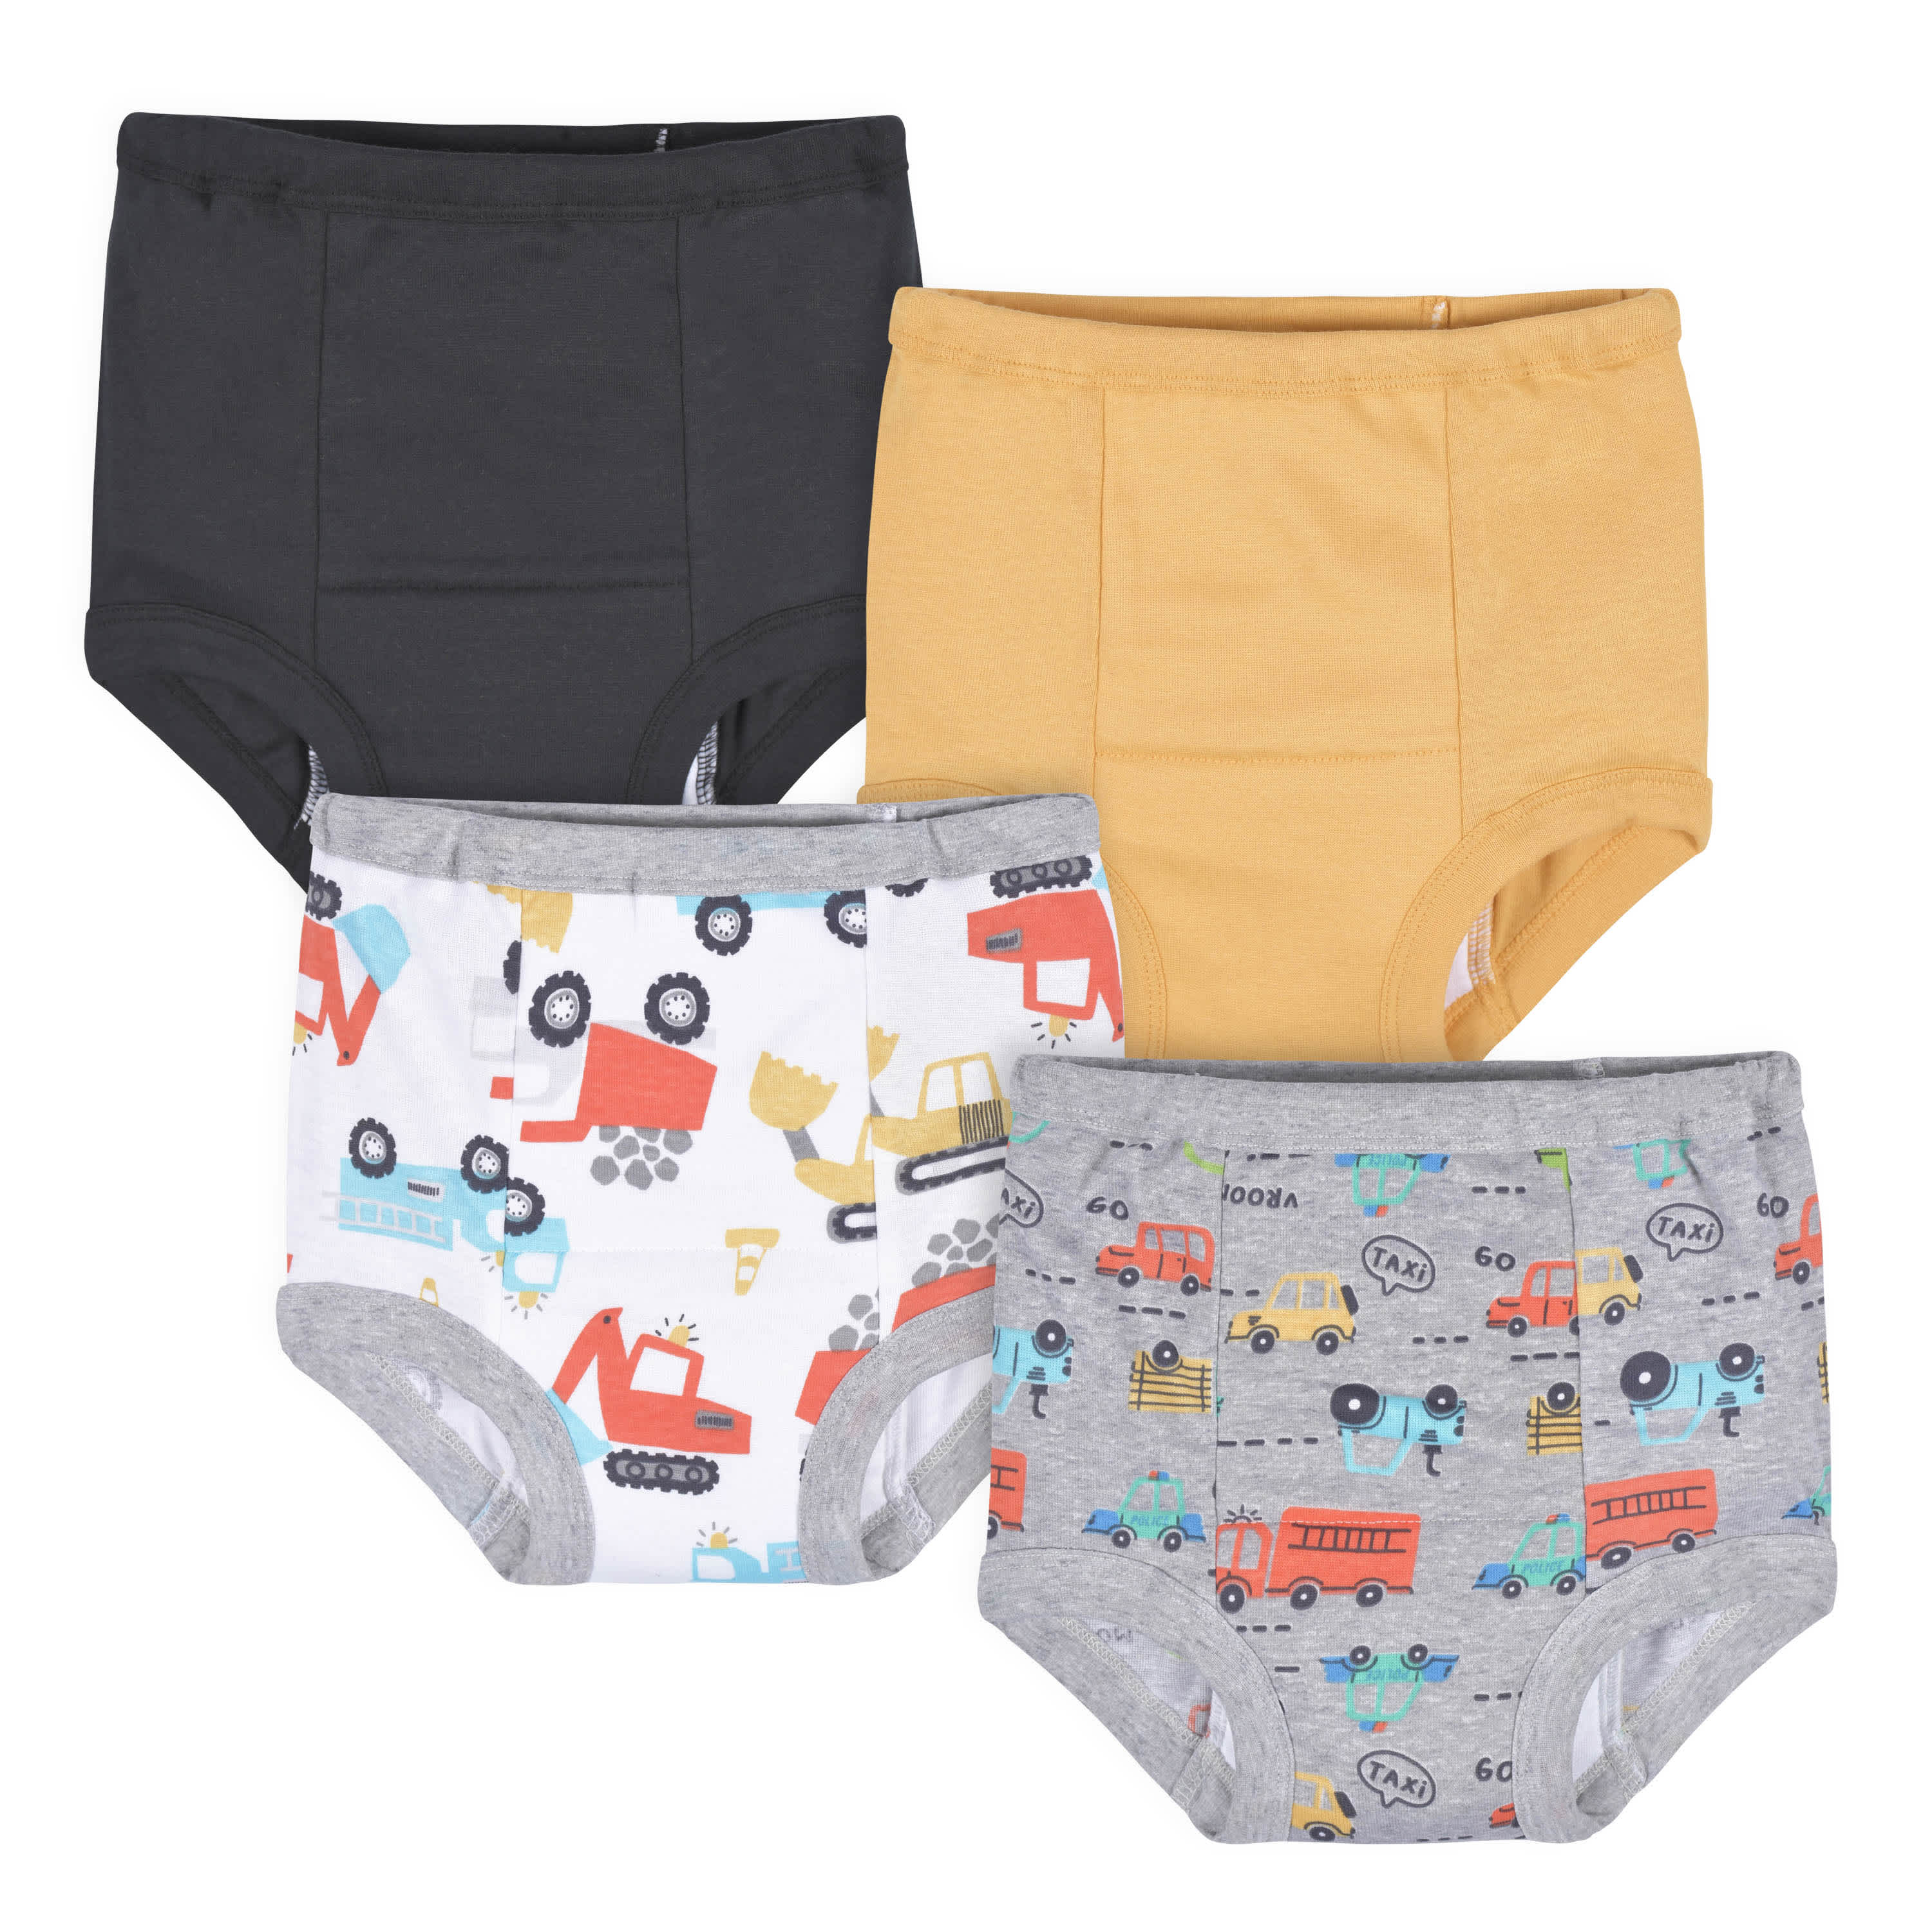 Kickee Pants Kids Print Underwear Set 3-Pack (Little Kids/Big Kids